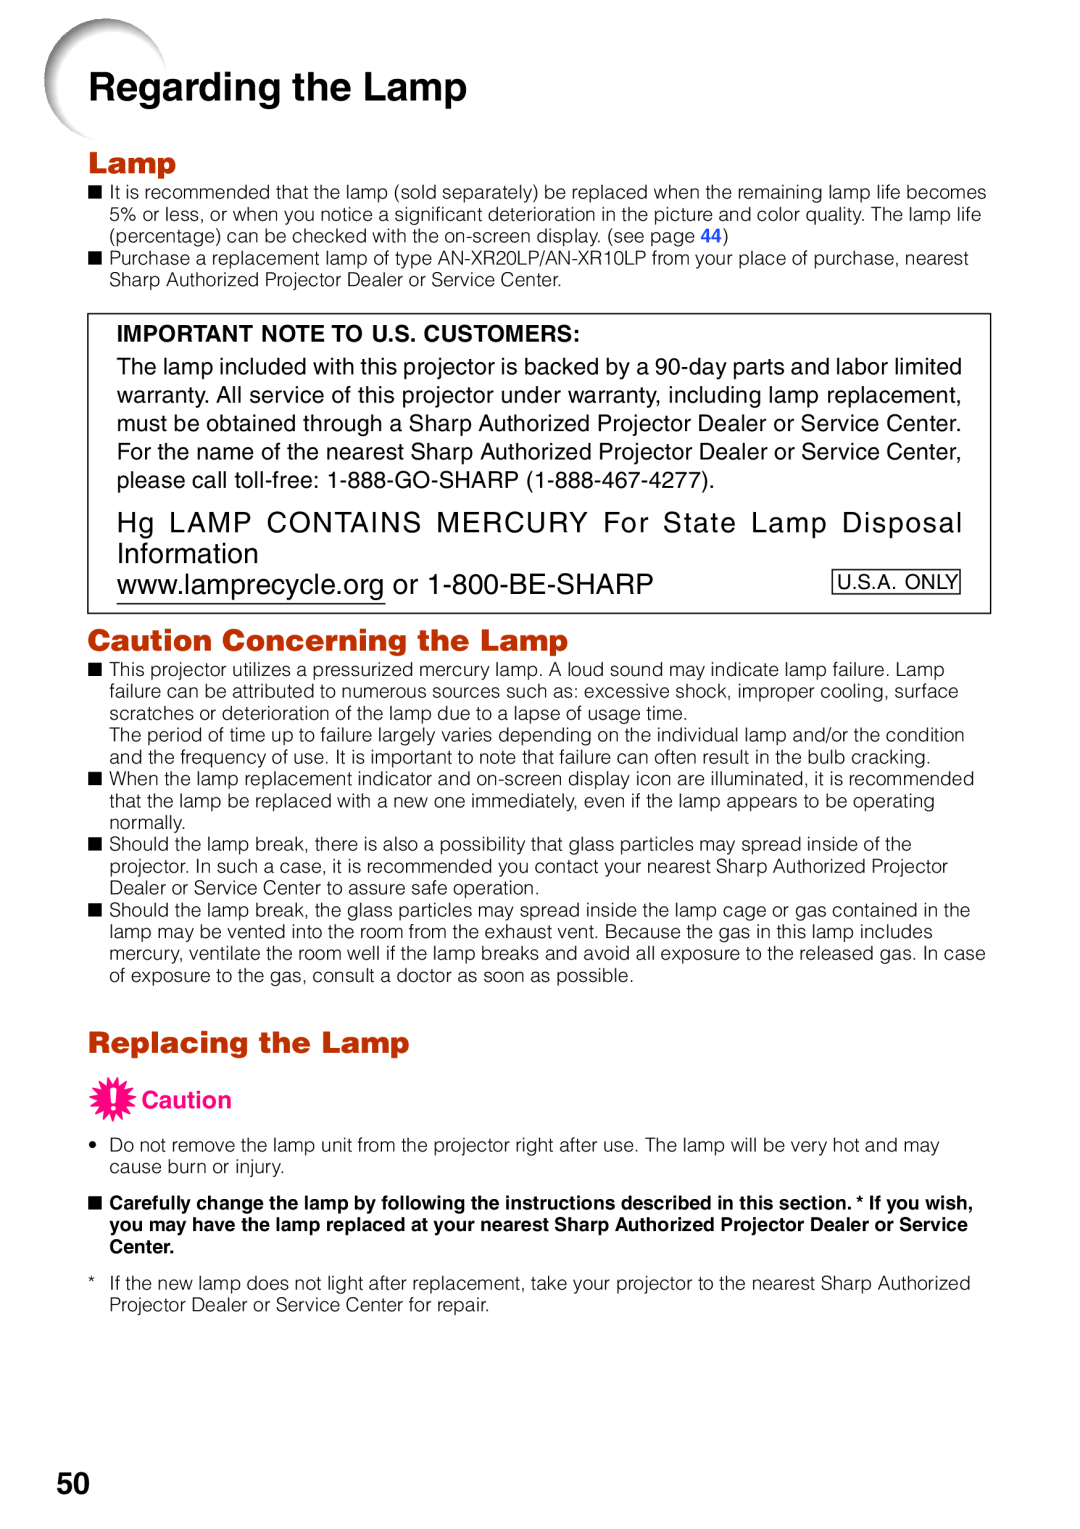 Sharp XG-MB55X Regarding the Lamp, Hg LAMP CONTAINS MERCURY For State Lamp Disposal, Information, Replacing the Lamp 